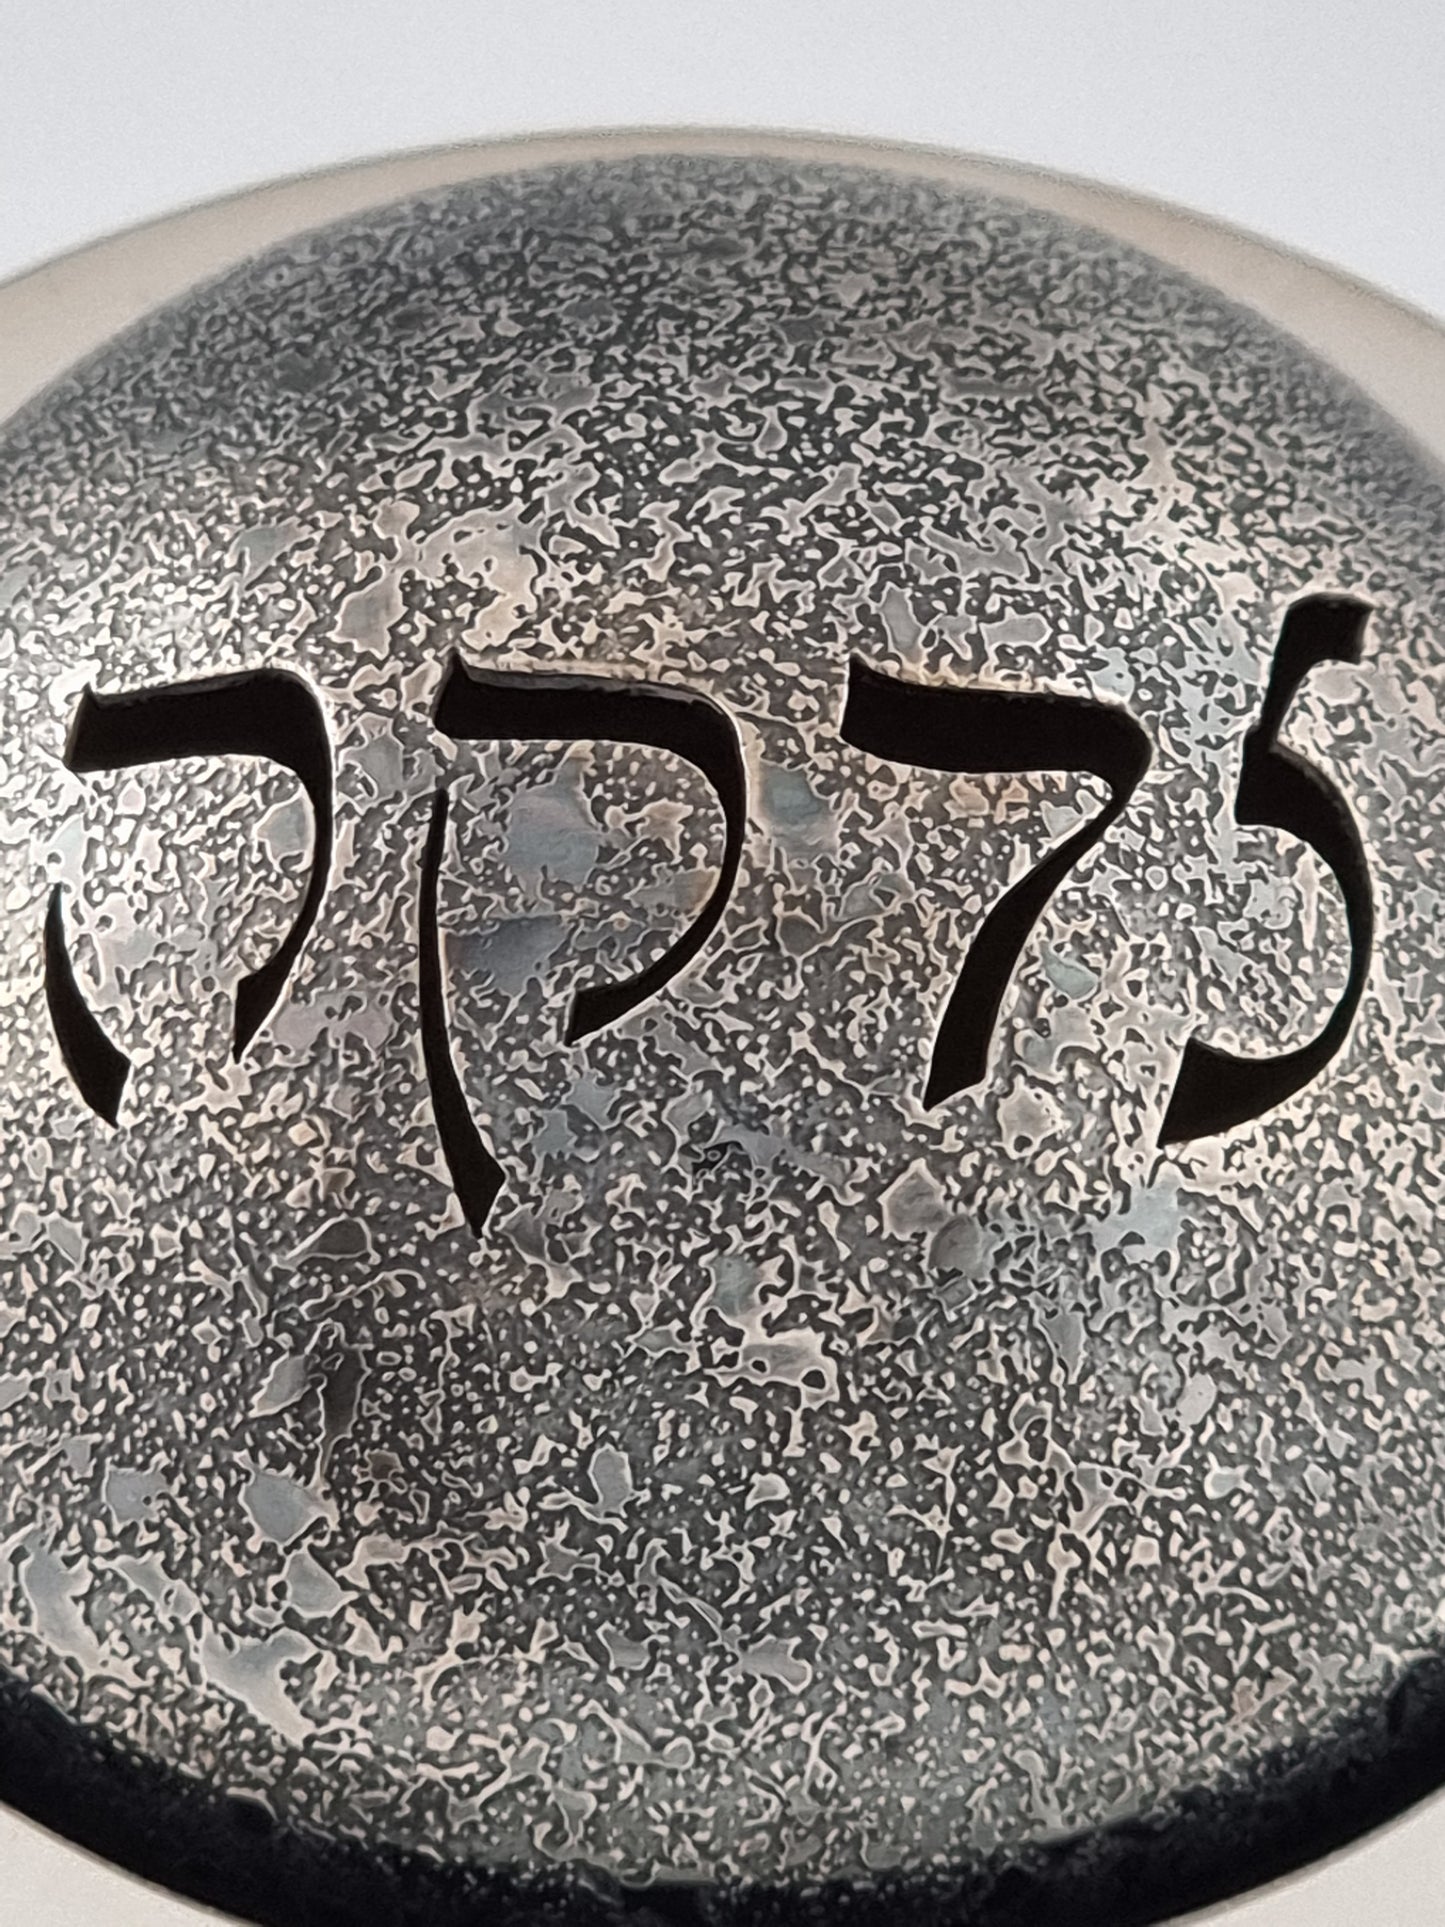 A close-up on the word "Tzedakah". 